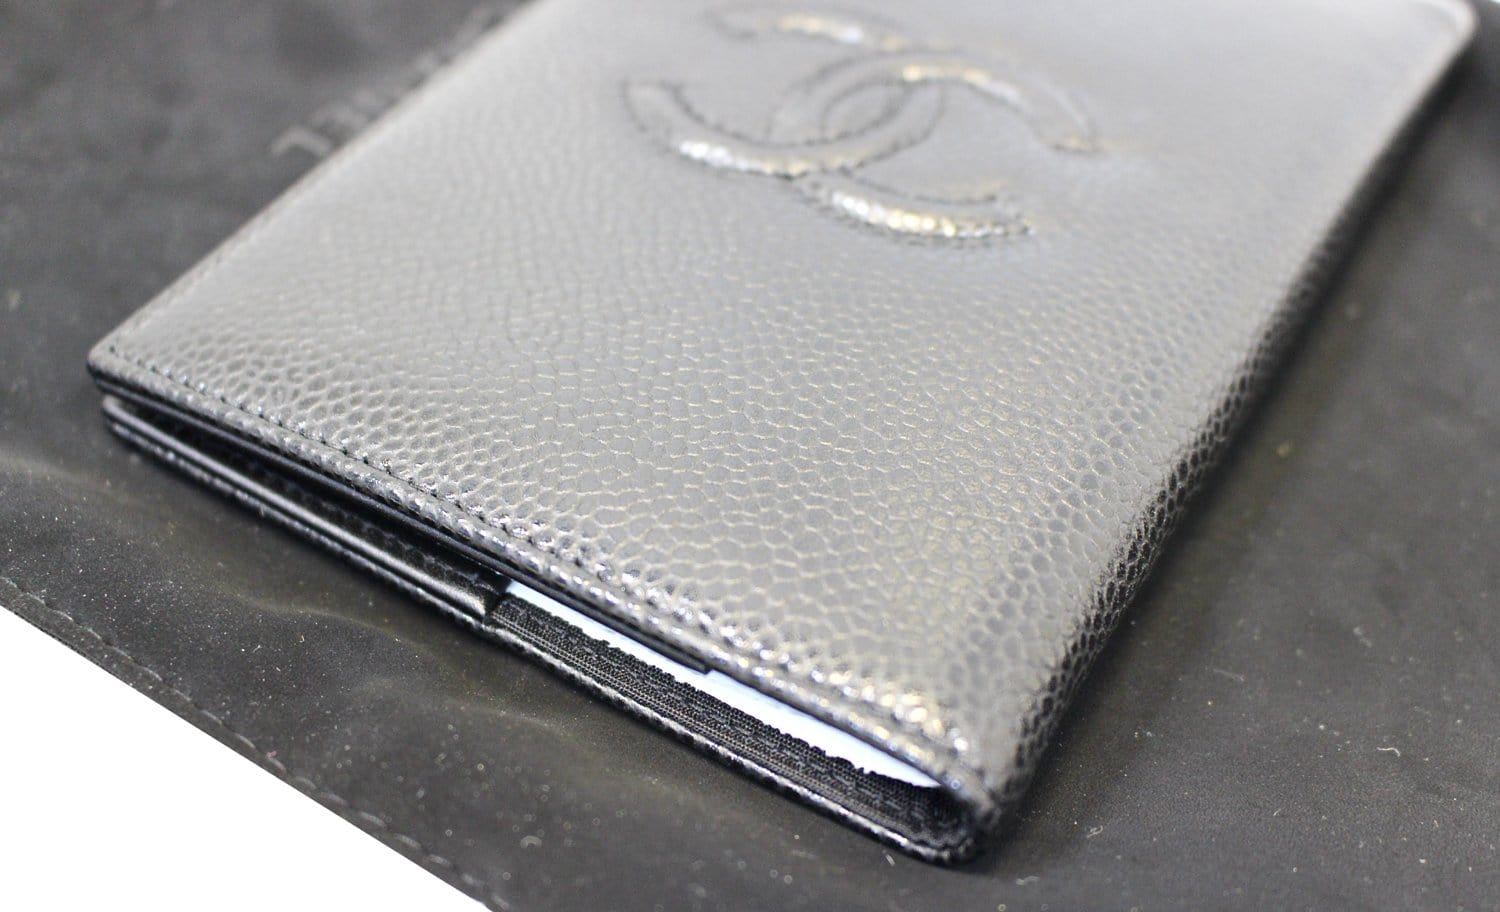 CHANEL Patent Leather Black Passport Wallet TT2119